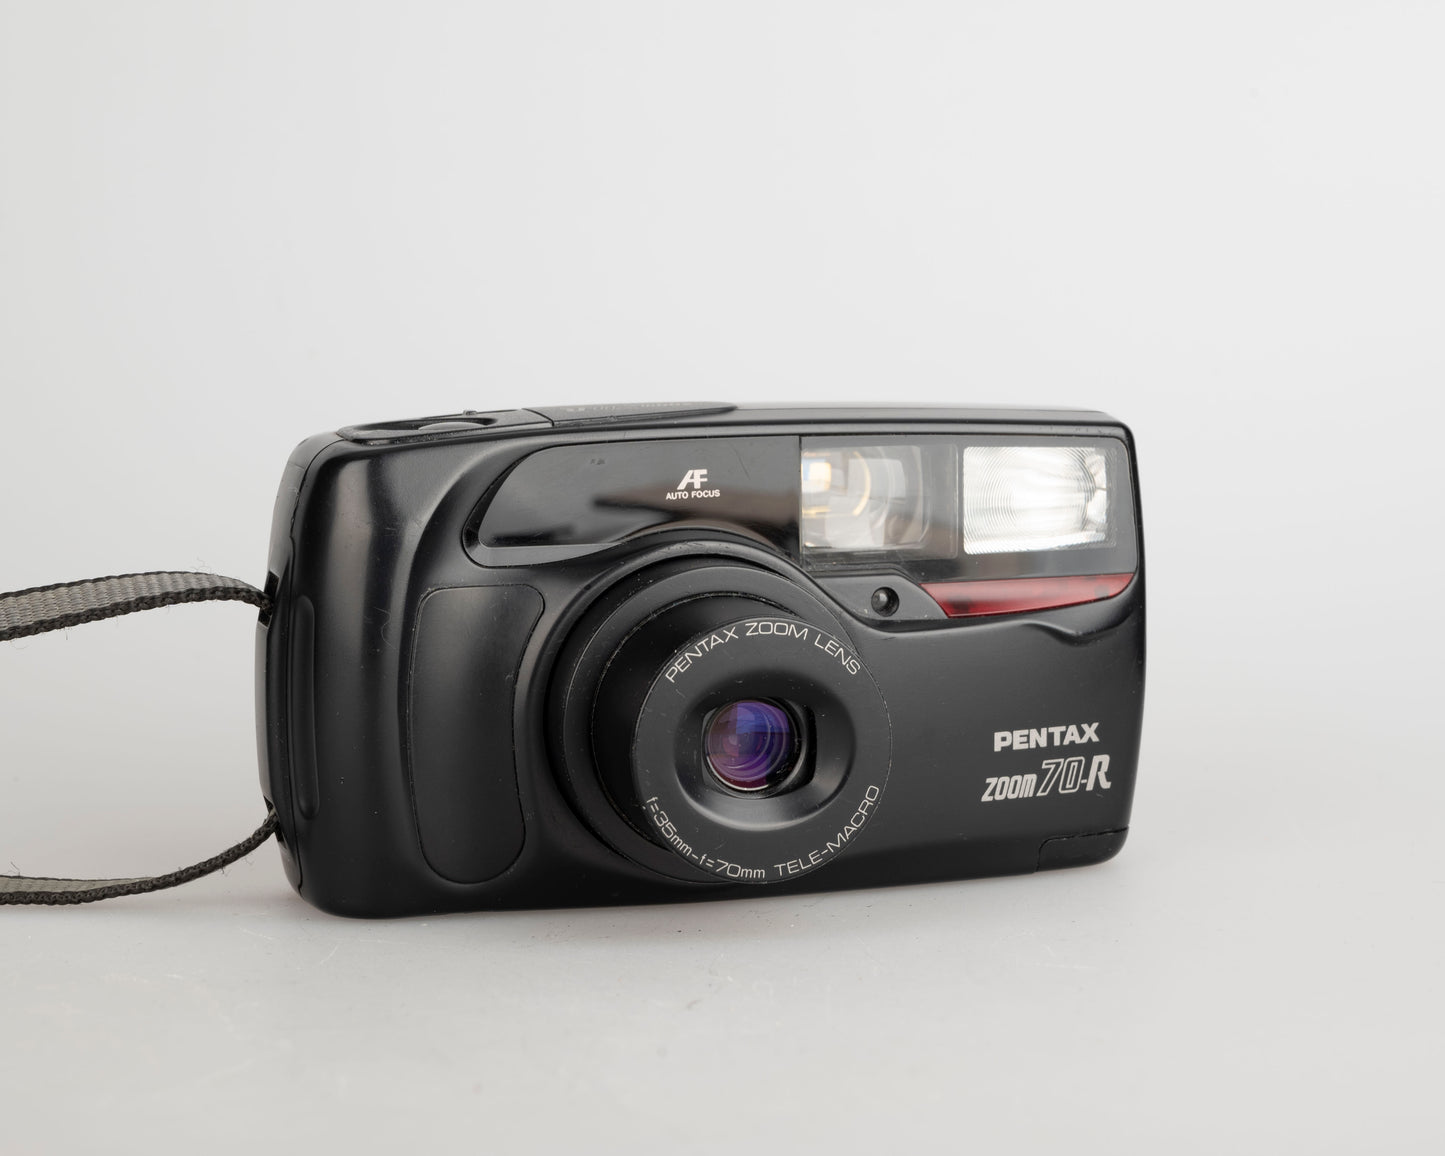 Pentax Zoom70-R 35mm film camera (serial 4352201)